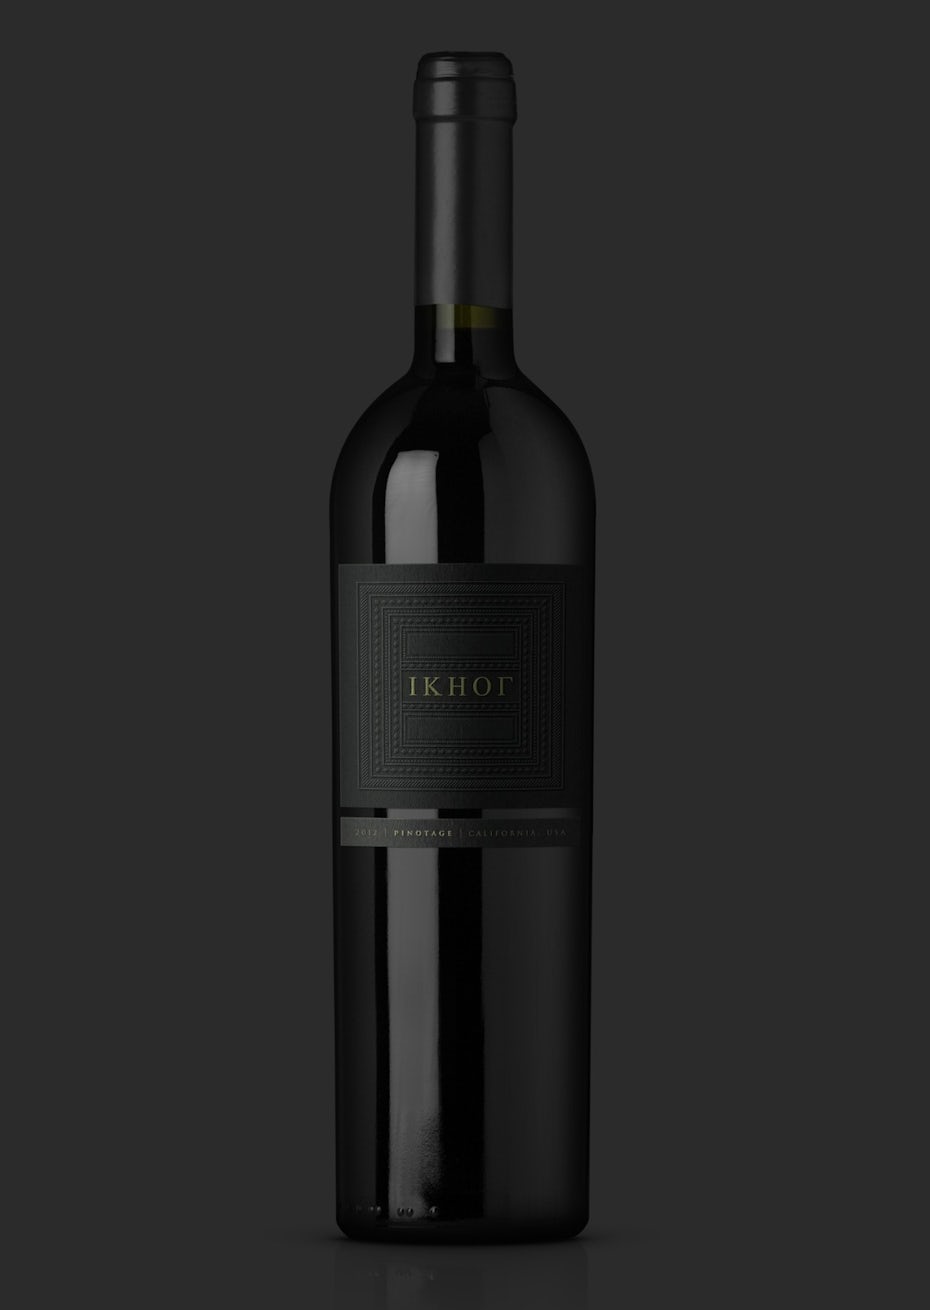 Ikhor wine label design